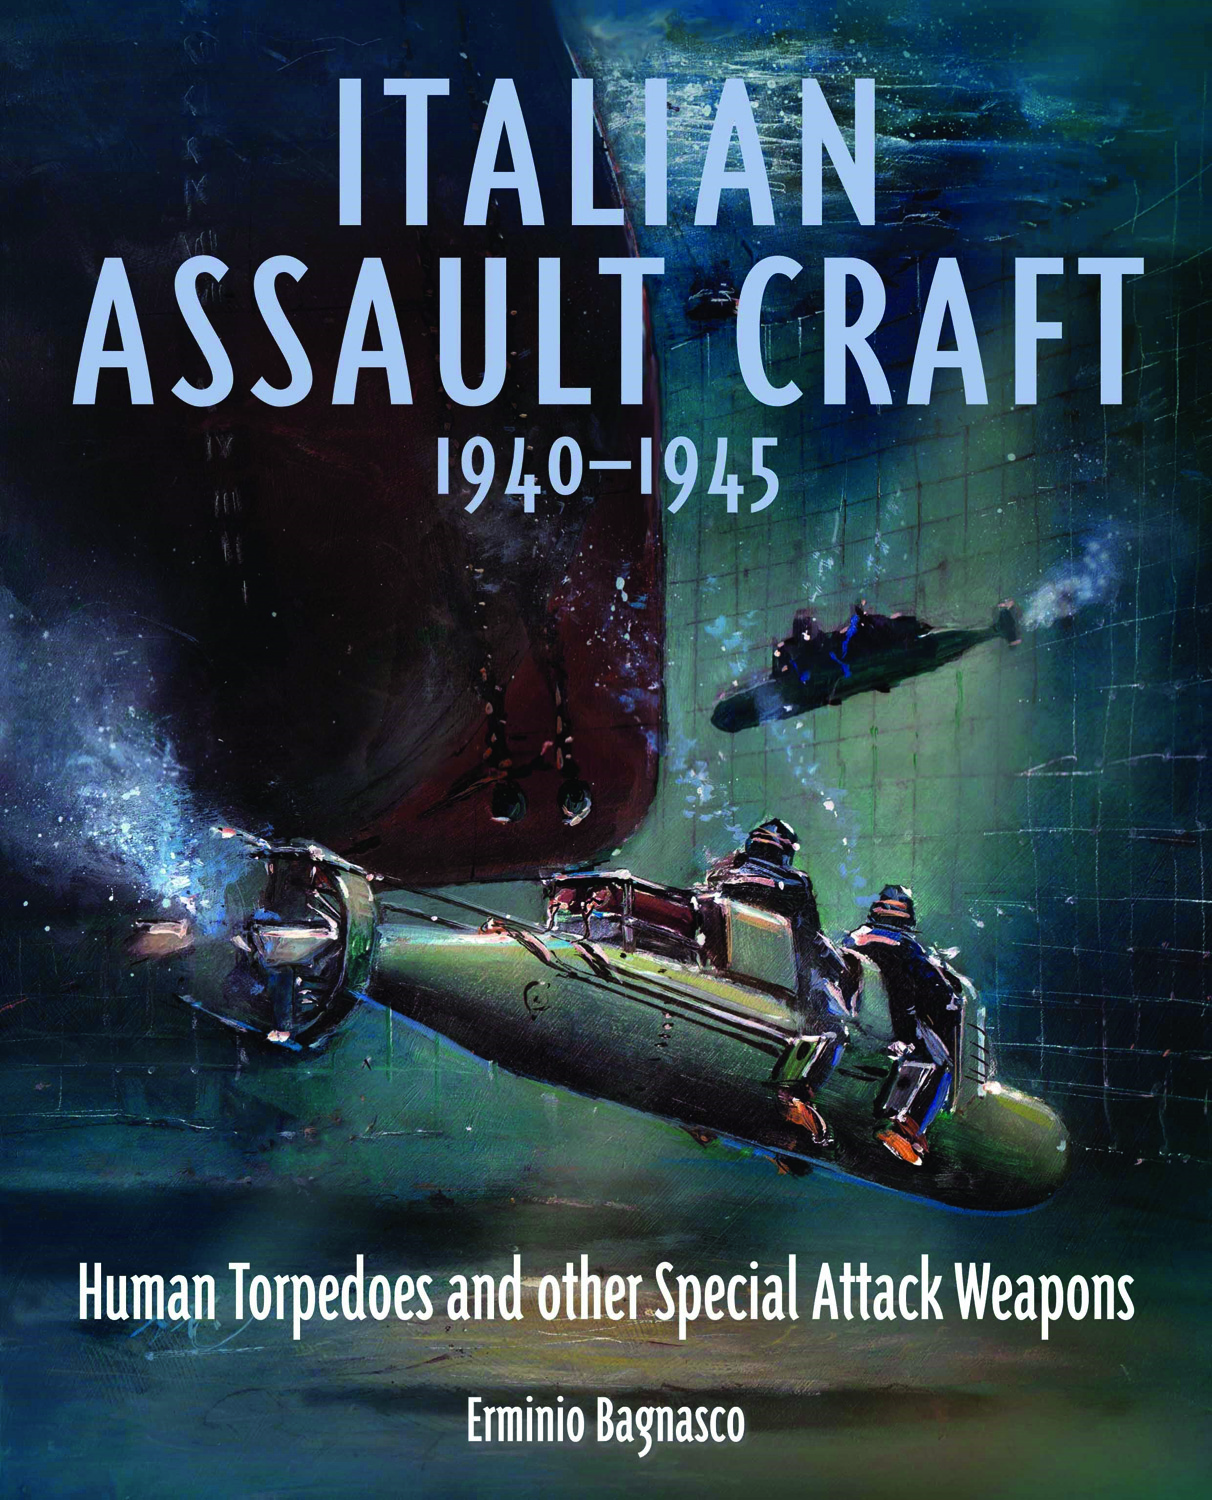 Italian Assault Craft 1940-1945